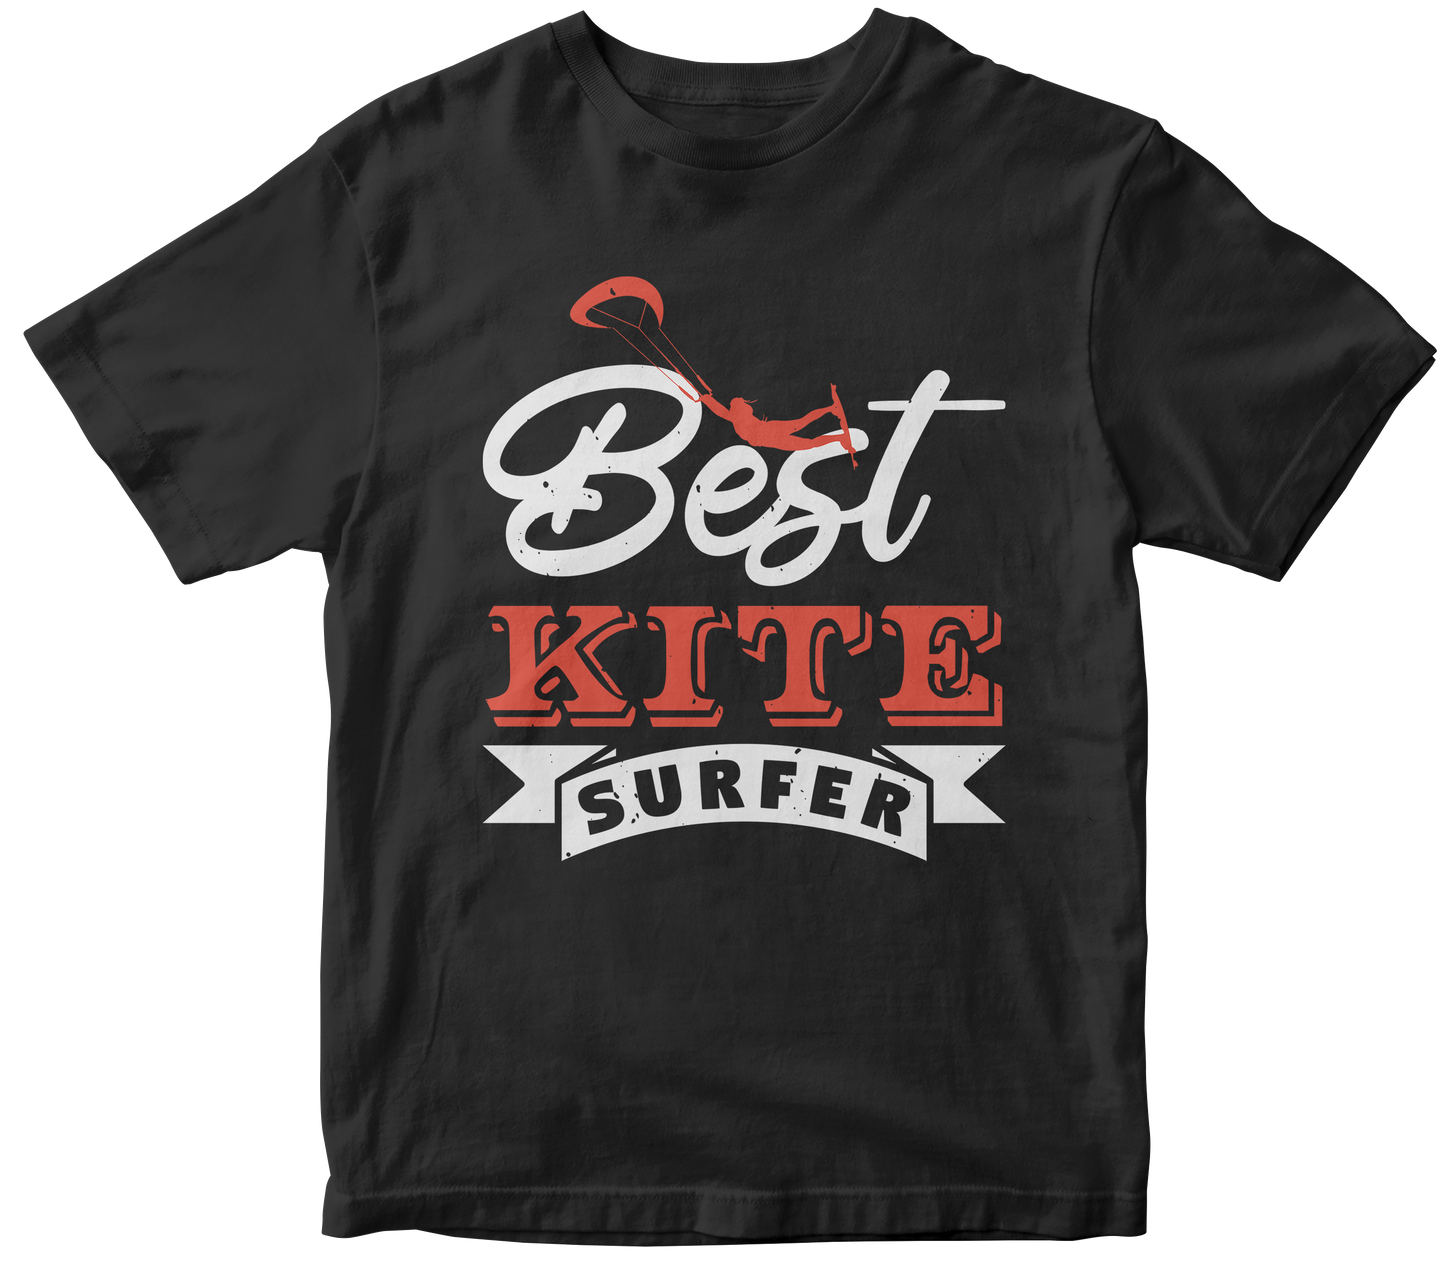 Best kite surfer